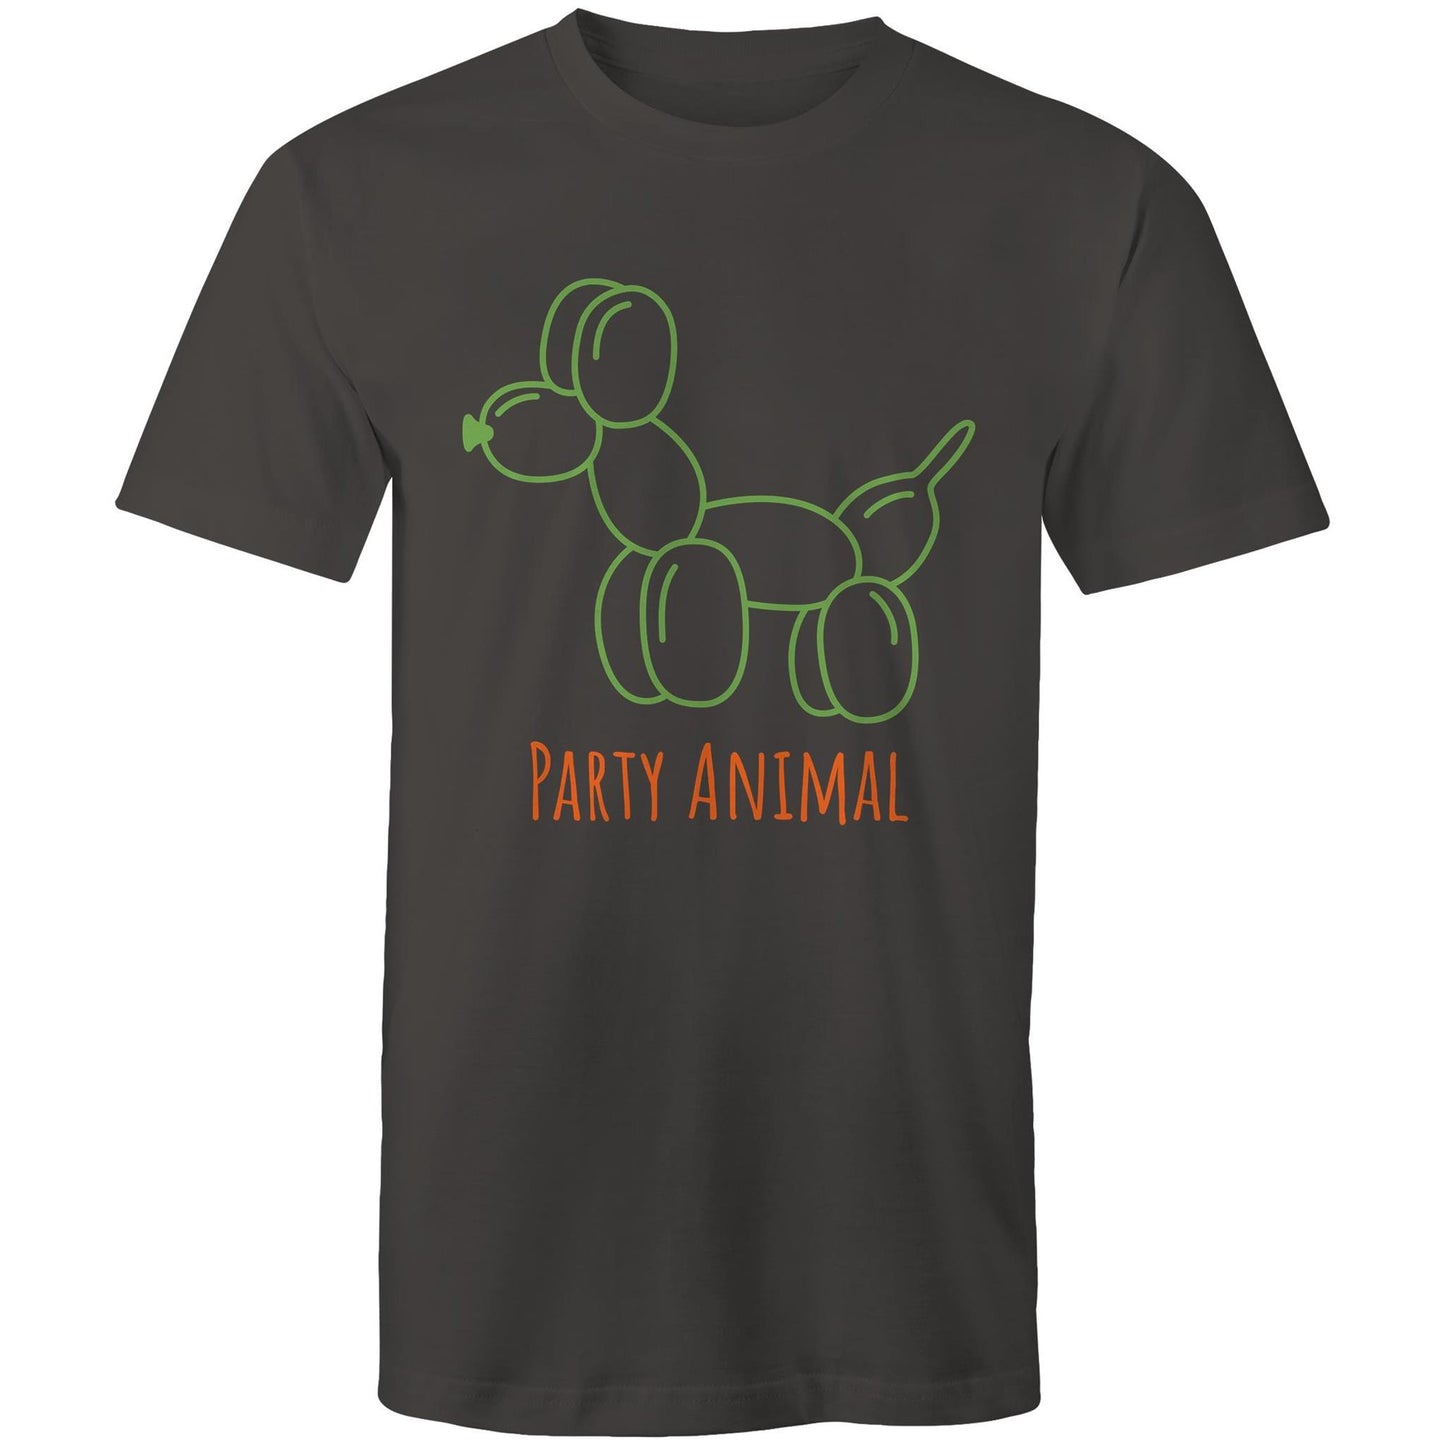 Party Animal - Mens T-Shirt Charcoal Mens T-shirt animal Funny Mens